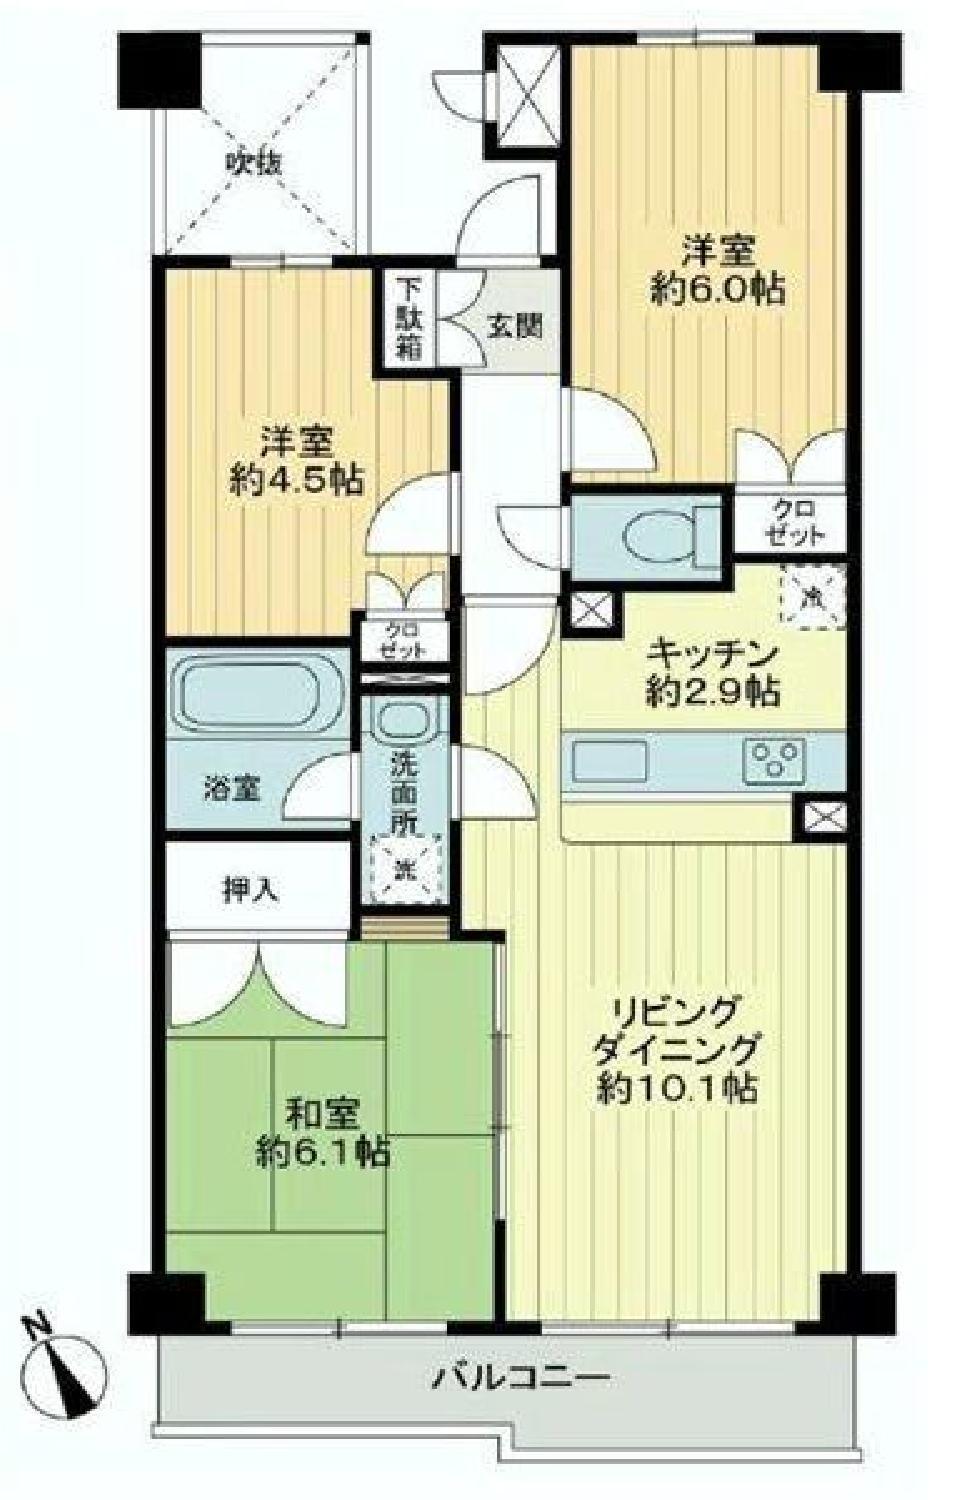 Floor plan. 3LDK, Price 26.5 million yen, Occupied area 61.52 sq m , Balcony area 6.83 sq m